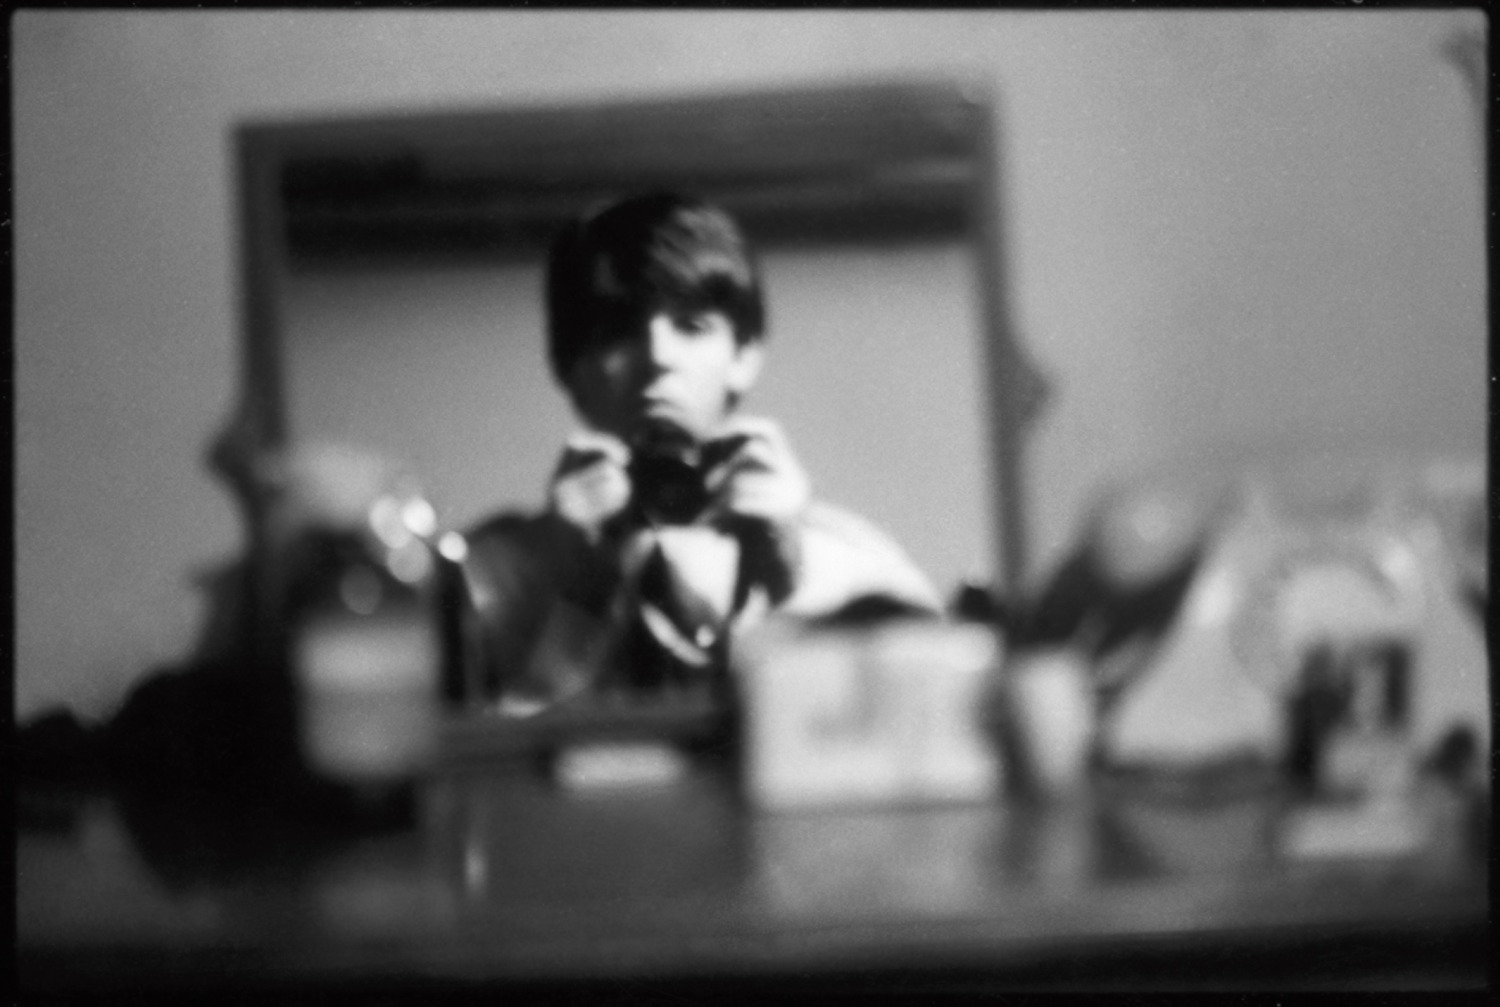 Self portrait. London, 1963
© 1963 1964 Paul McCartney under exclusive license to MPL Archive LLP